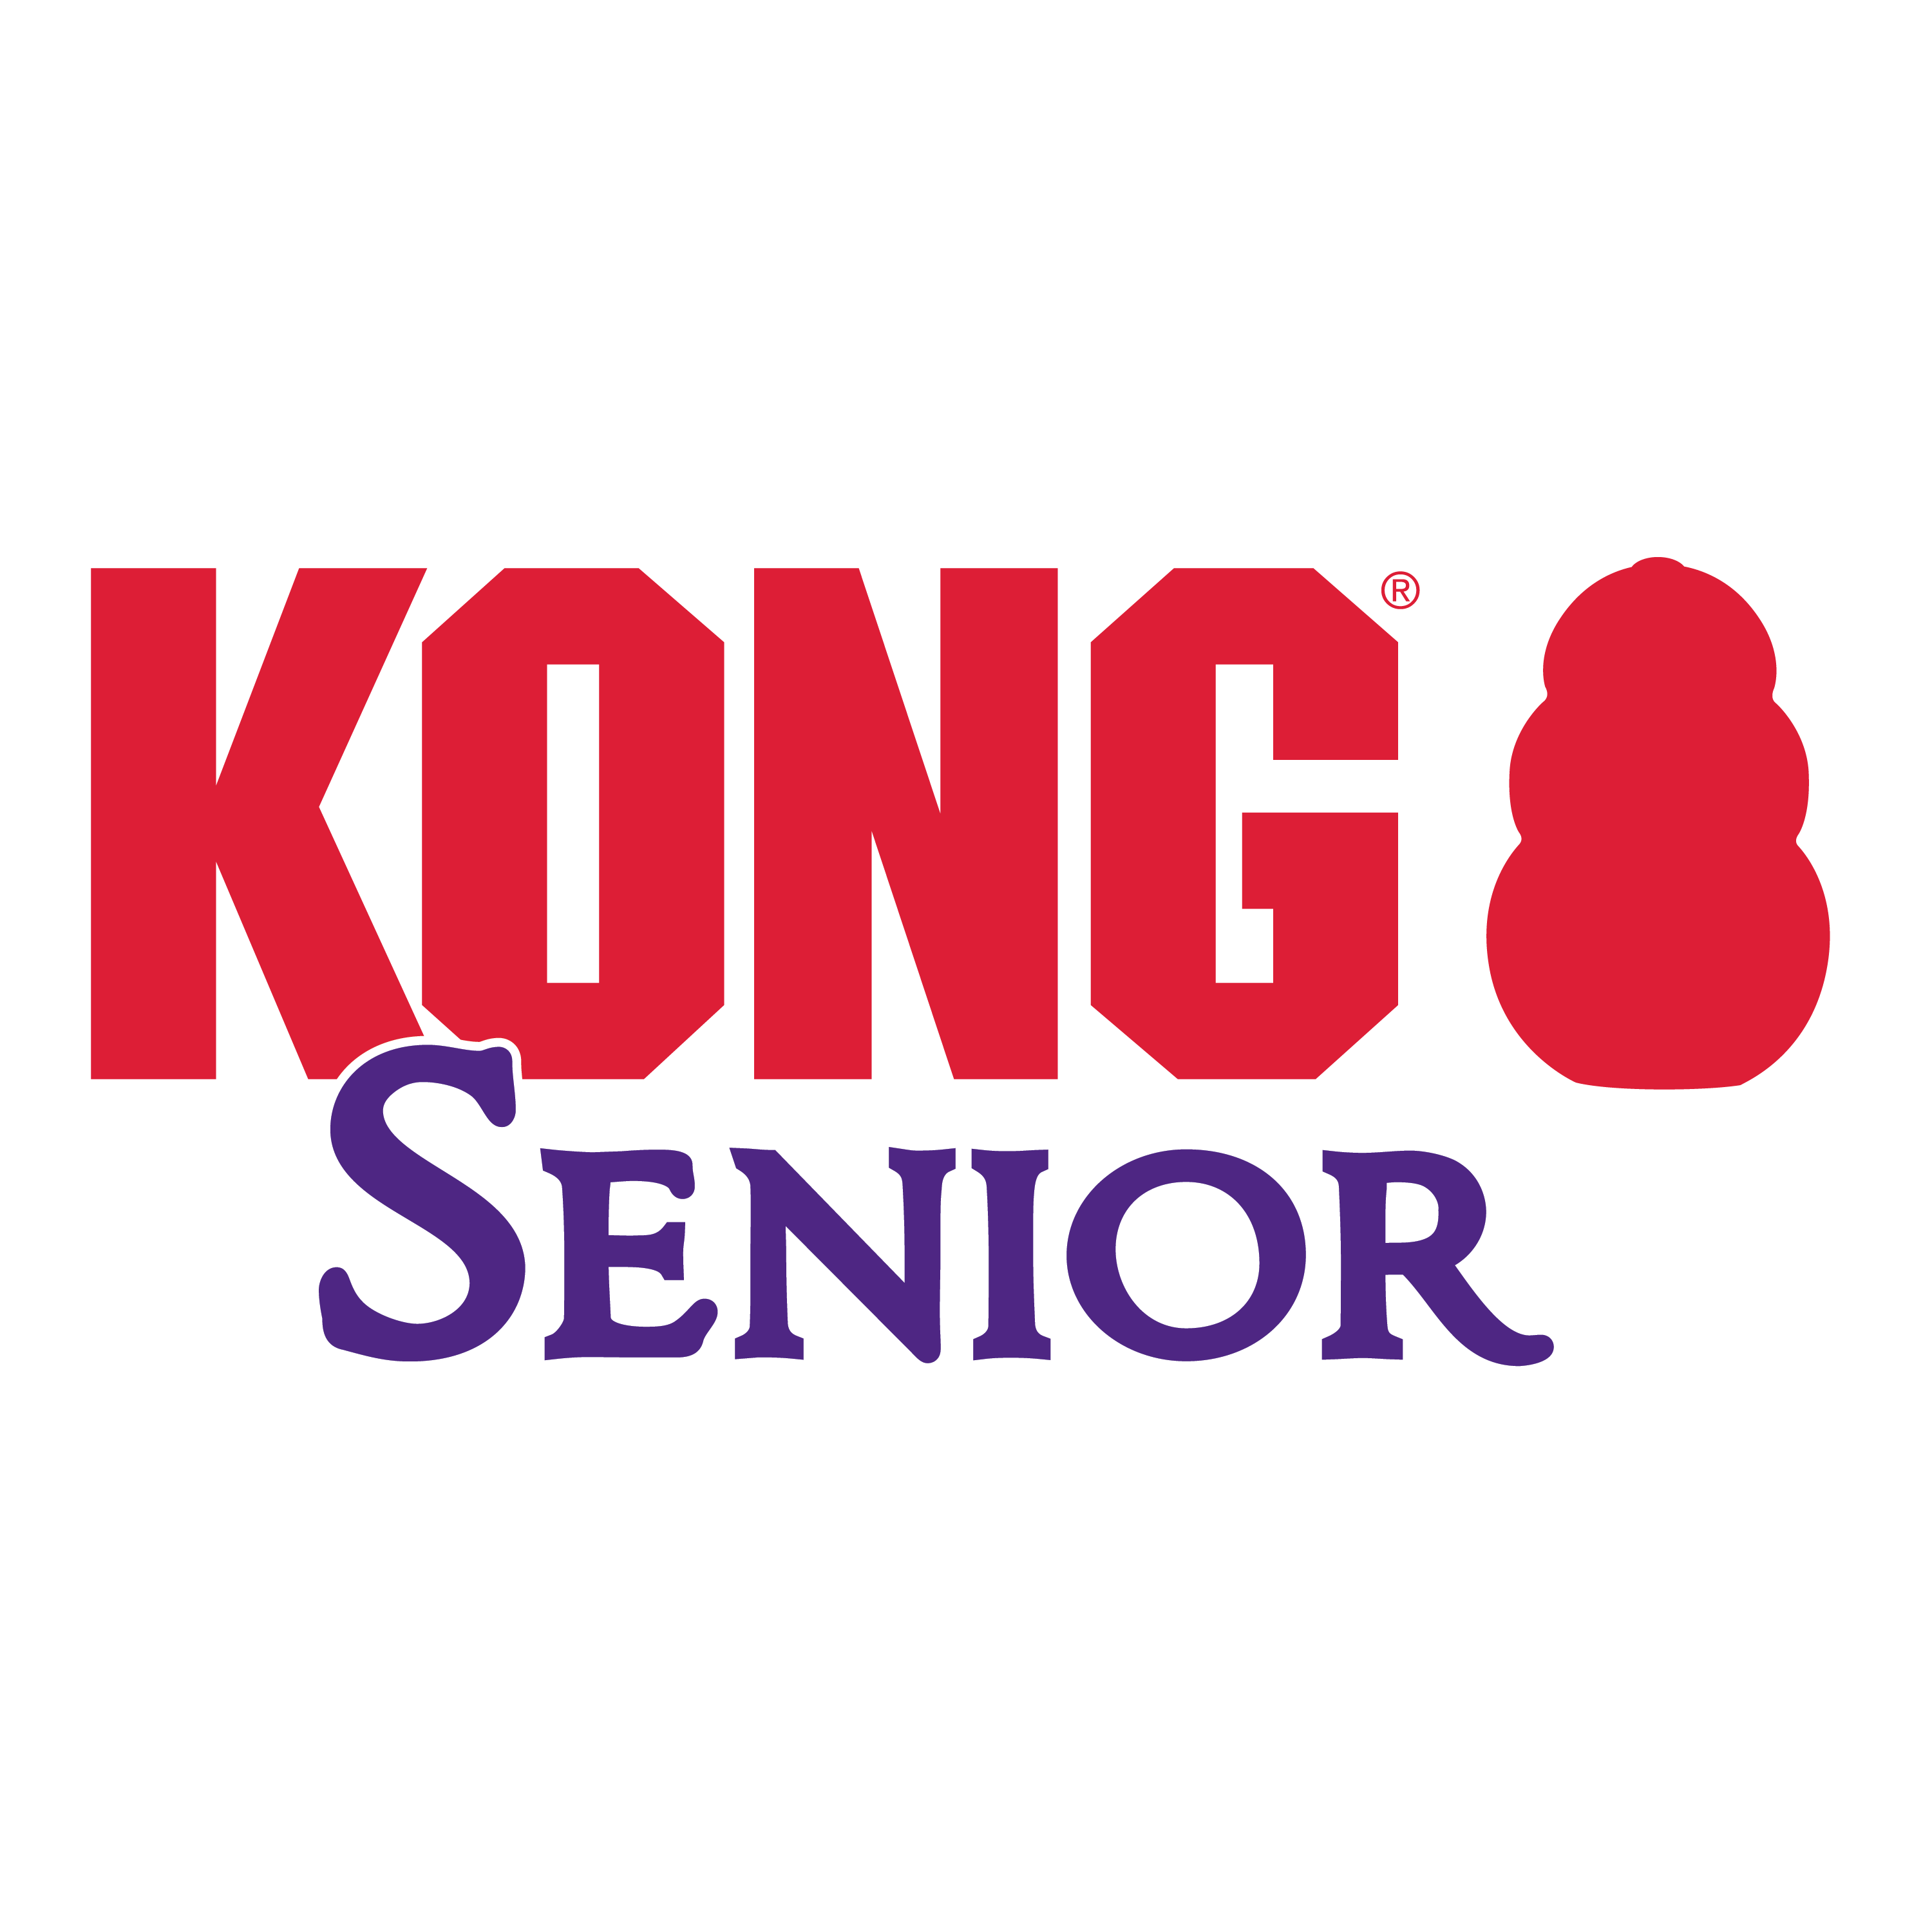 KONG Senior  KONG Company